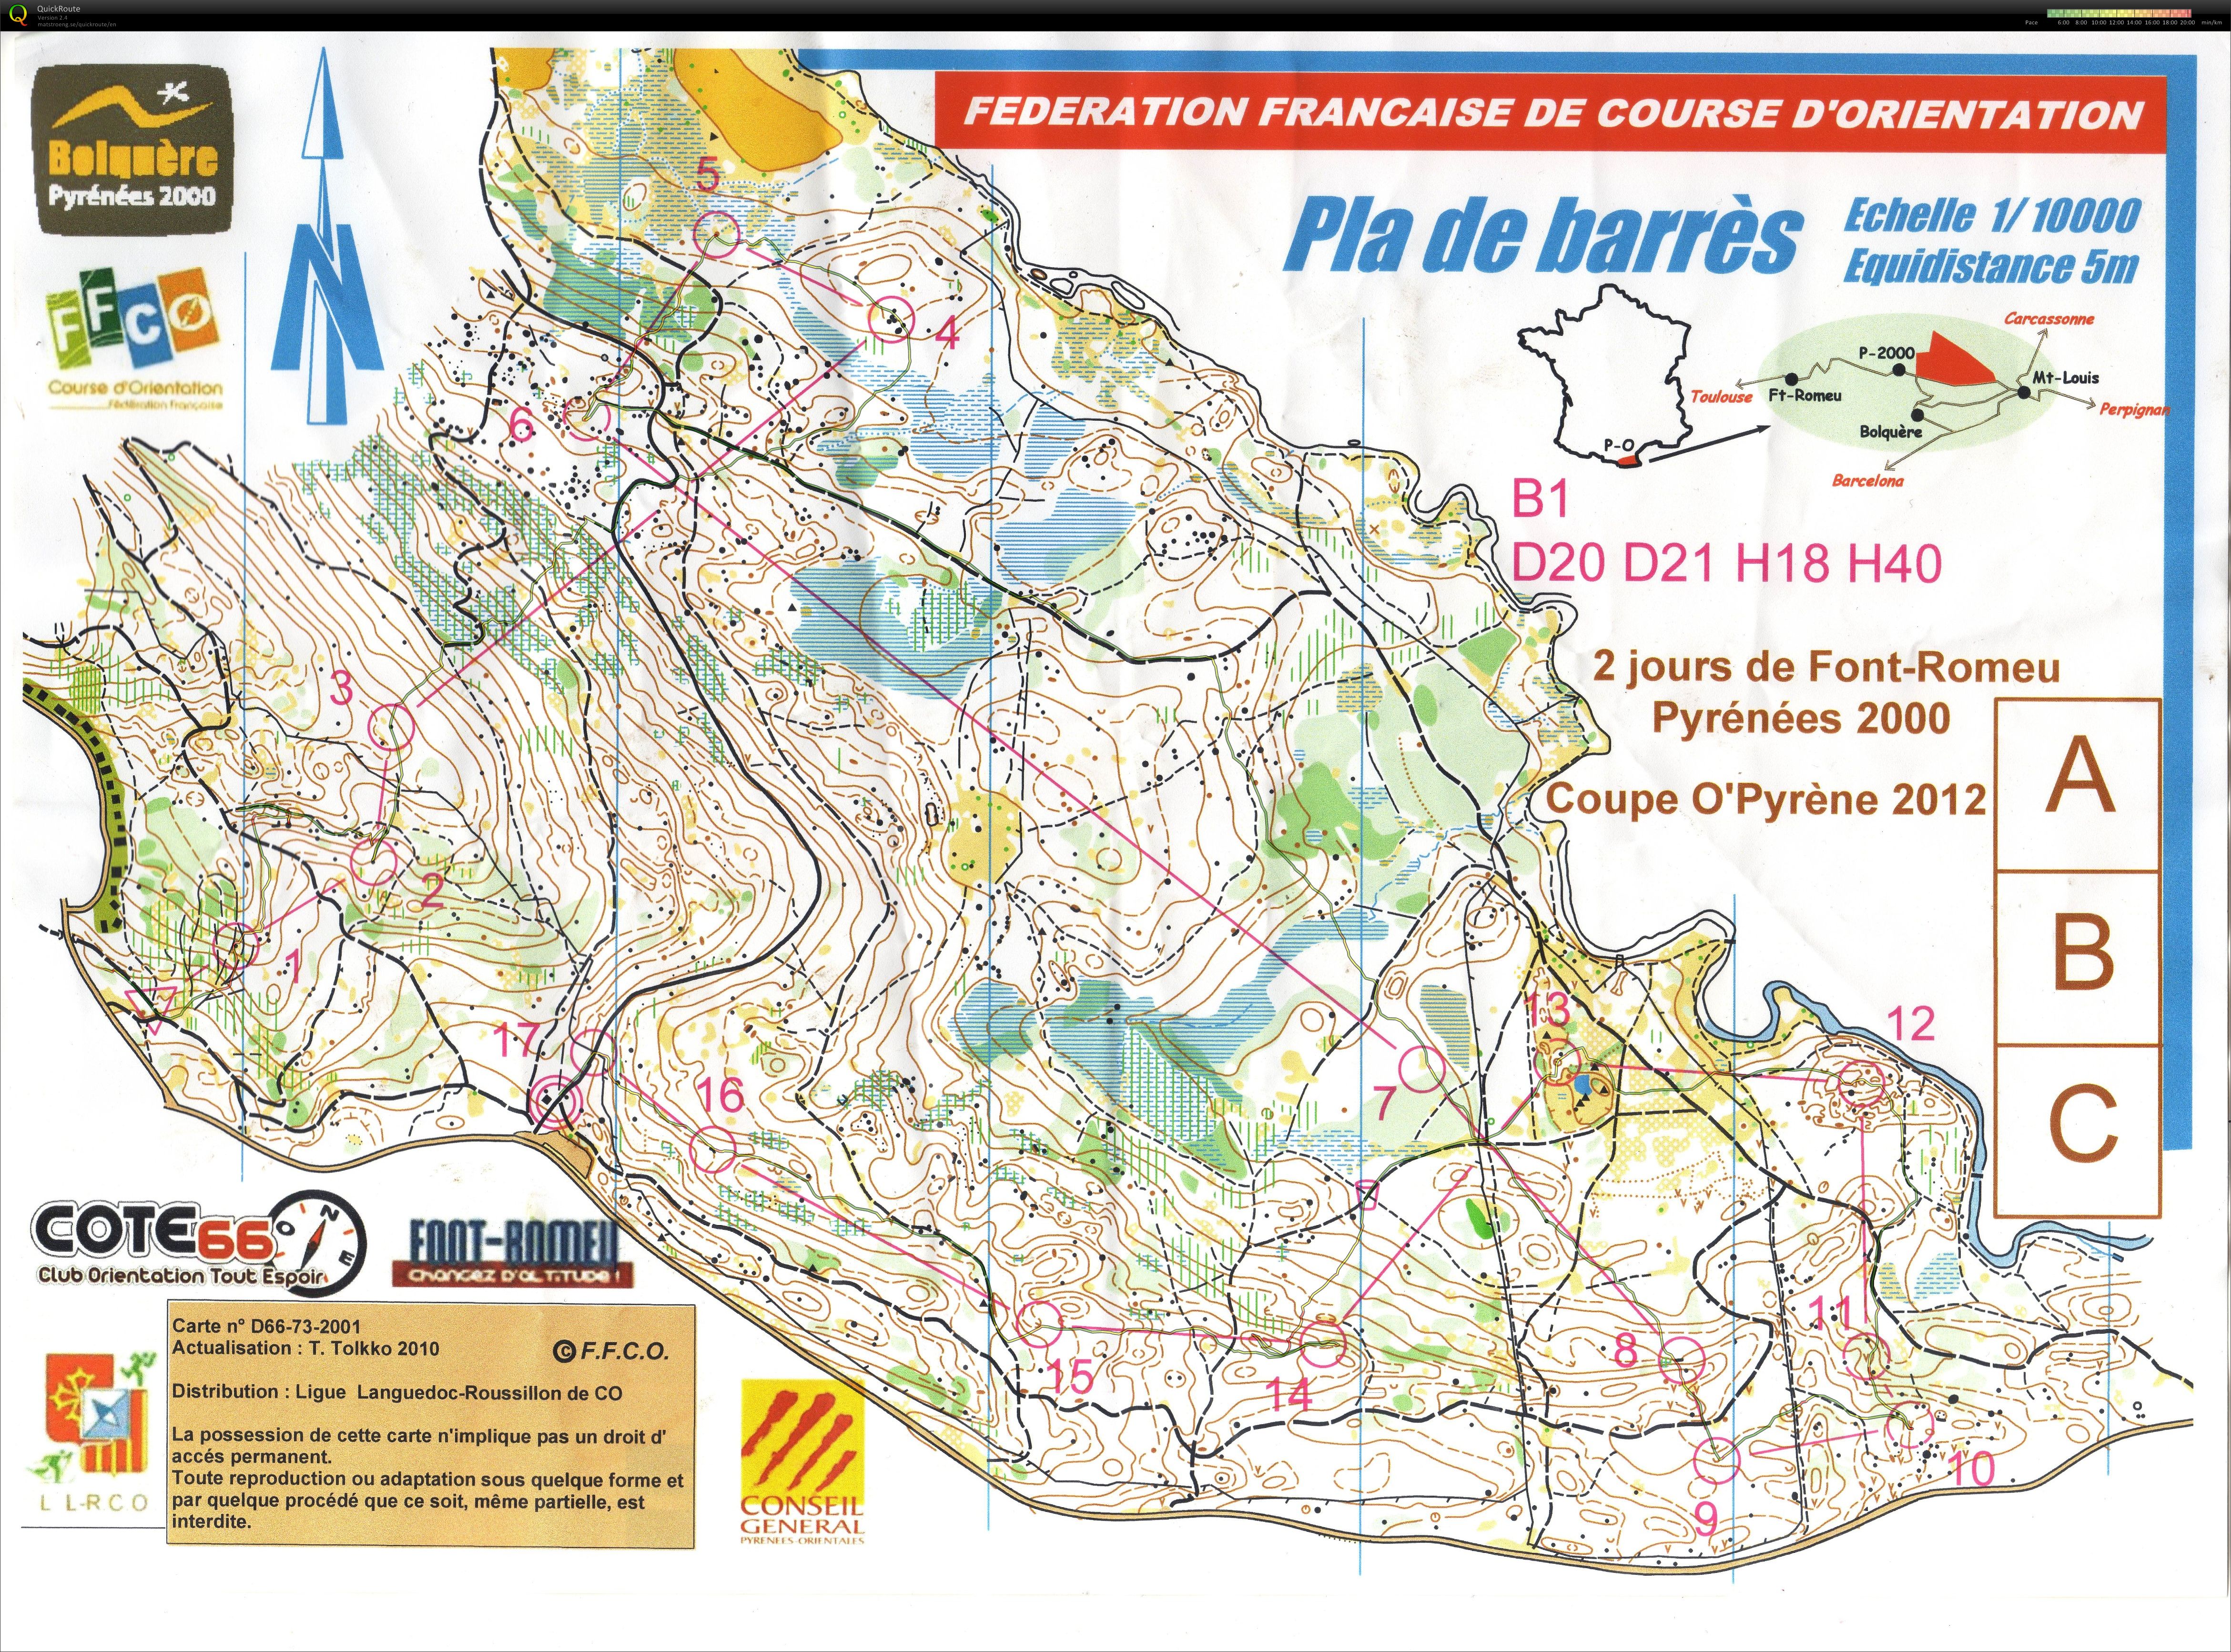 O'Pyrene 2 jours de Font Romeu - Prénées 2000 (2012-09-01)